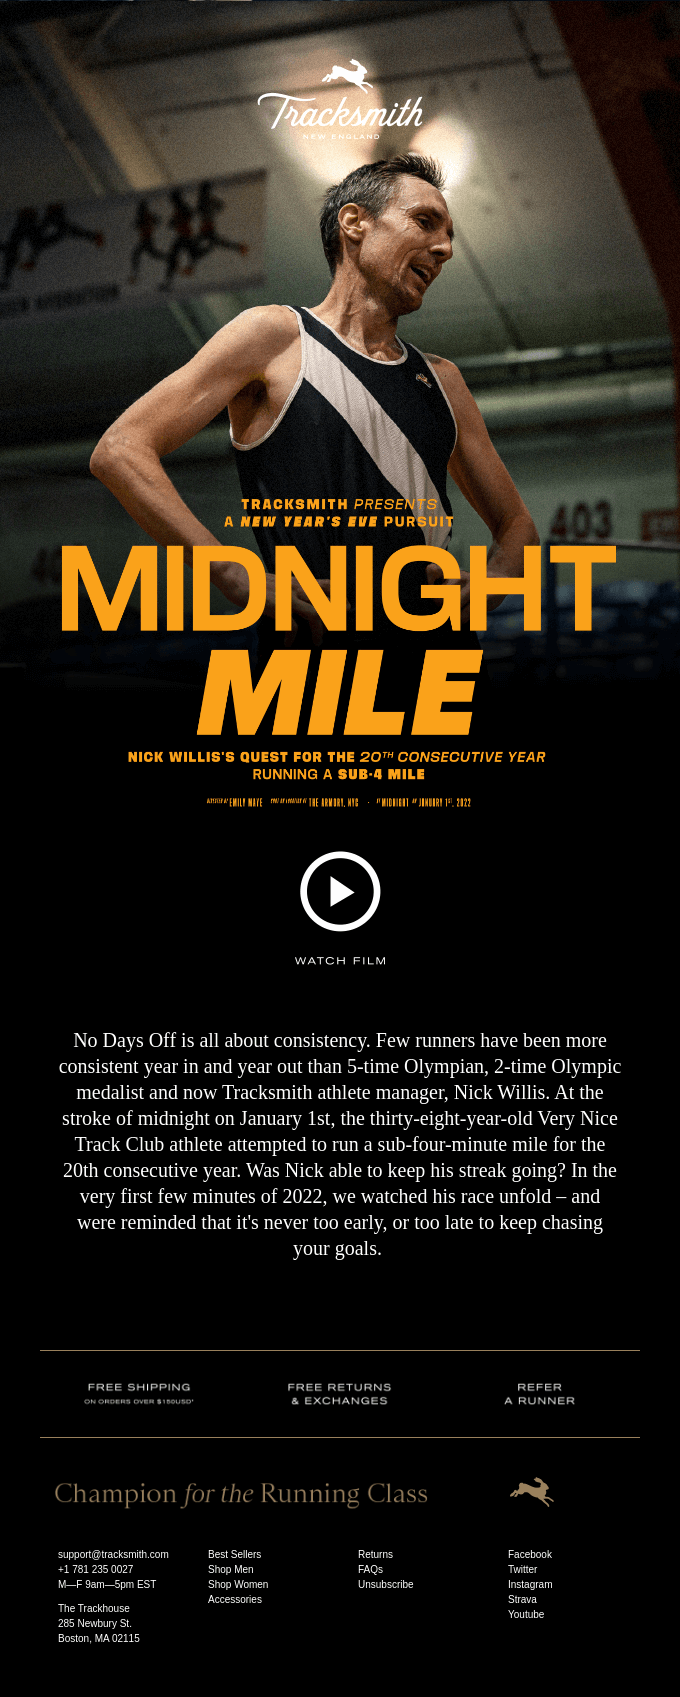 The Midnight Mile